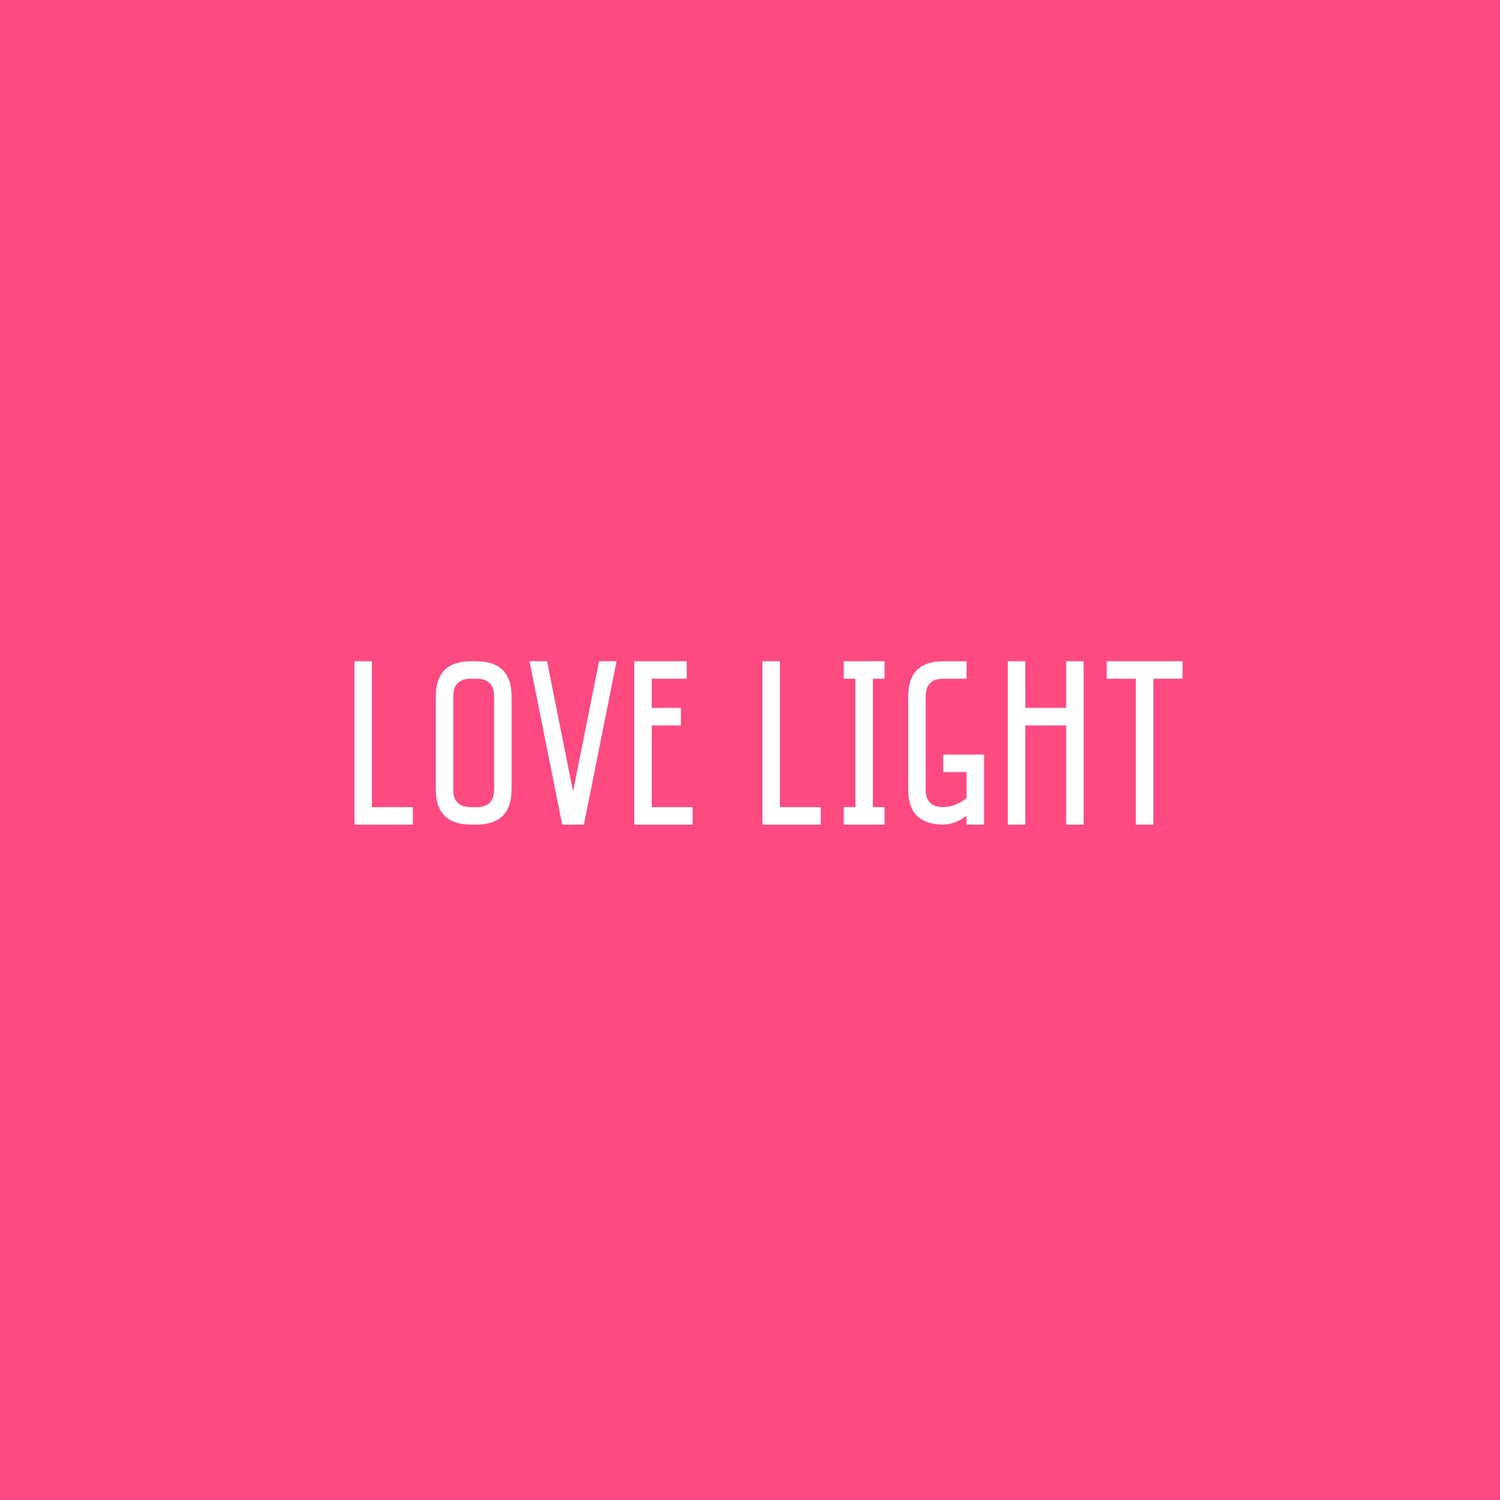 Lovelight